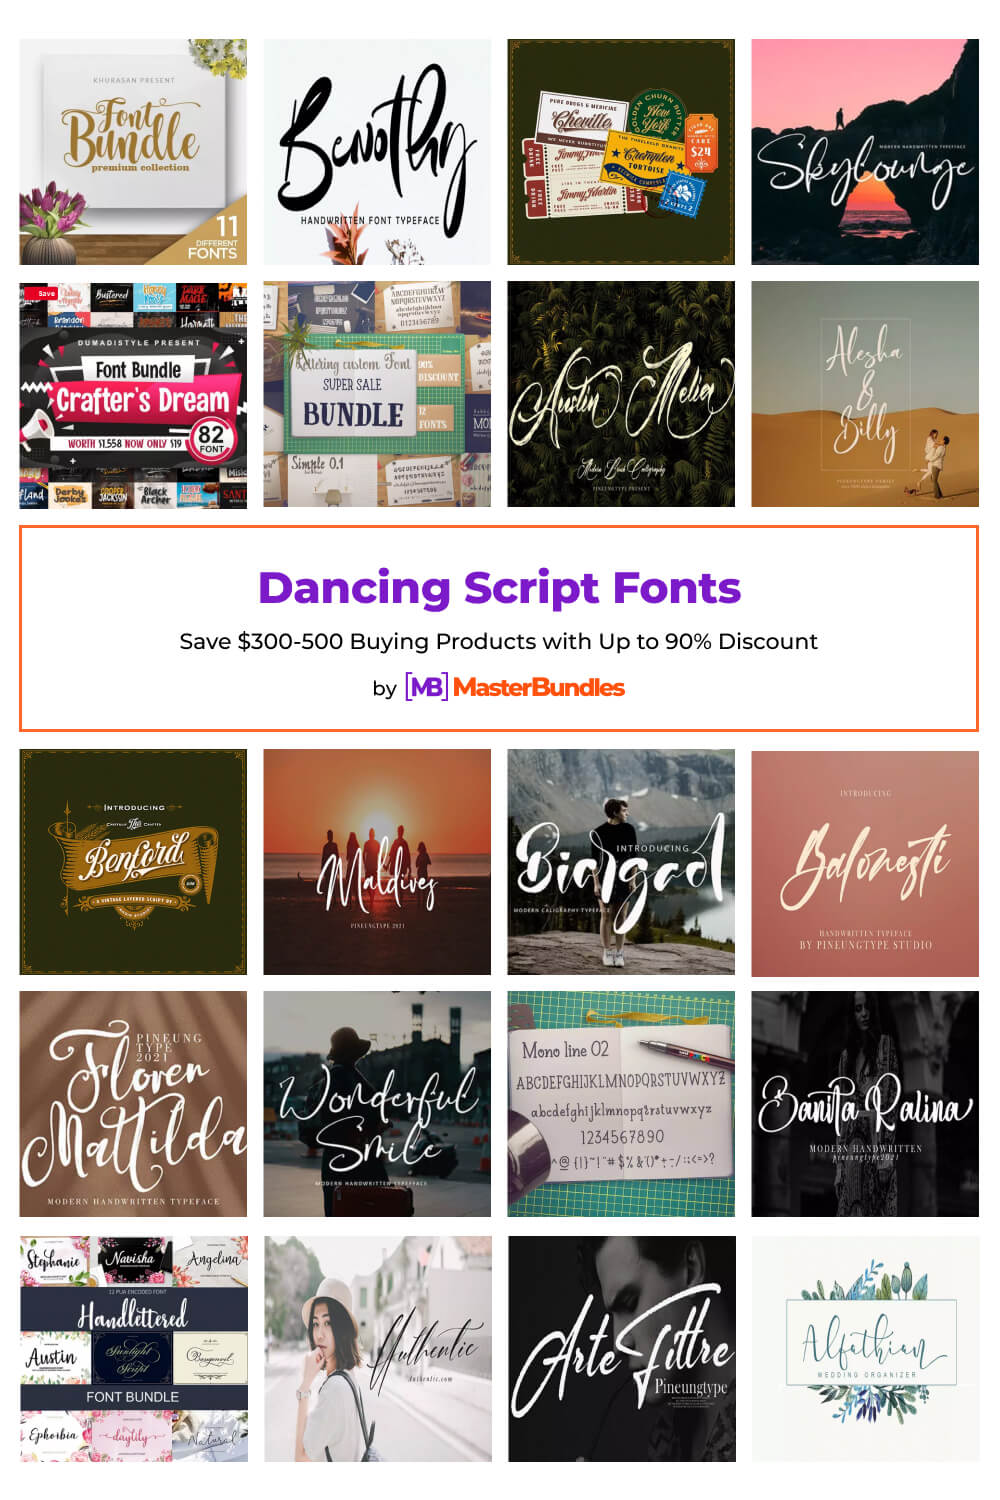 dancing script fonts pinterest image.